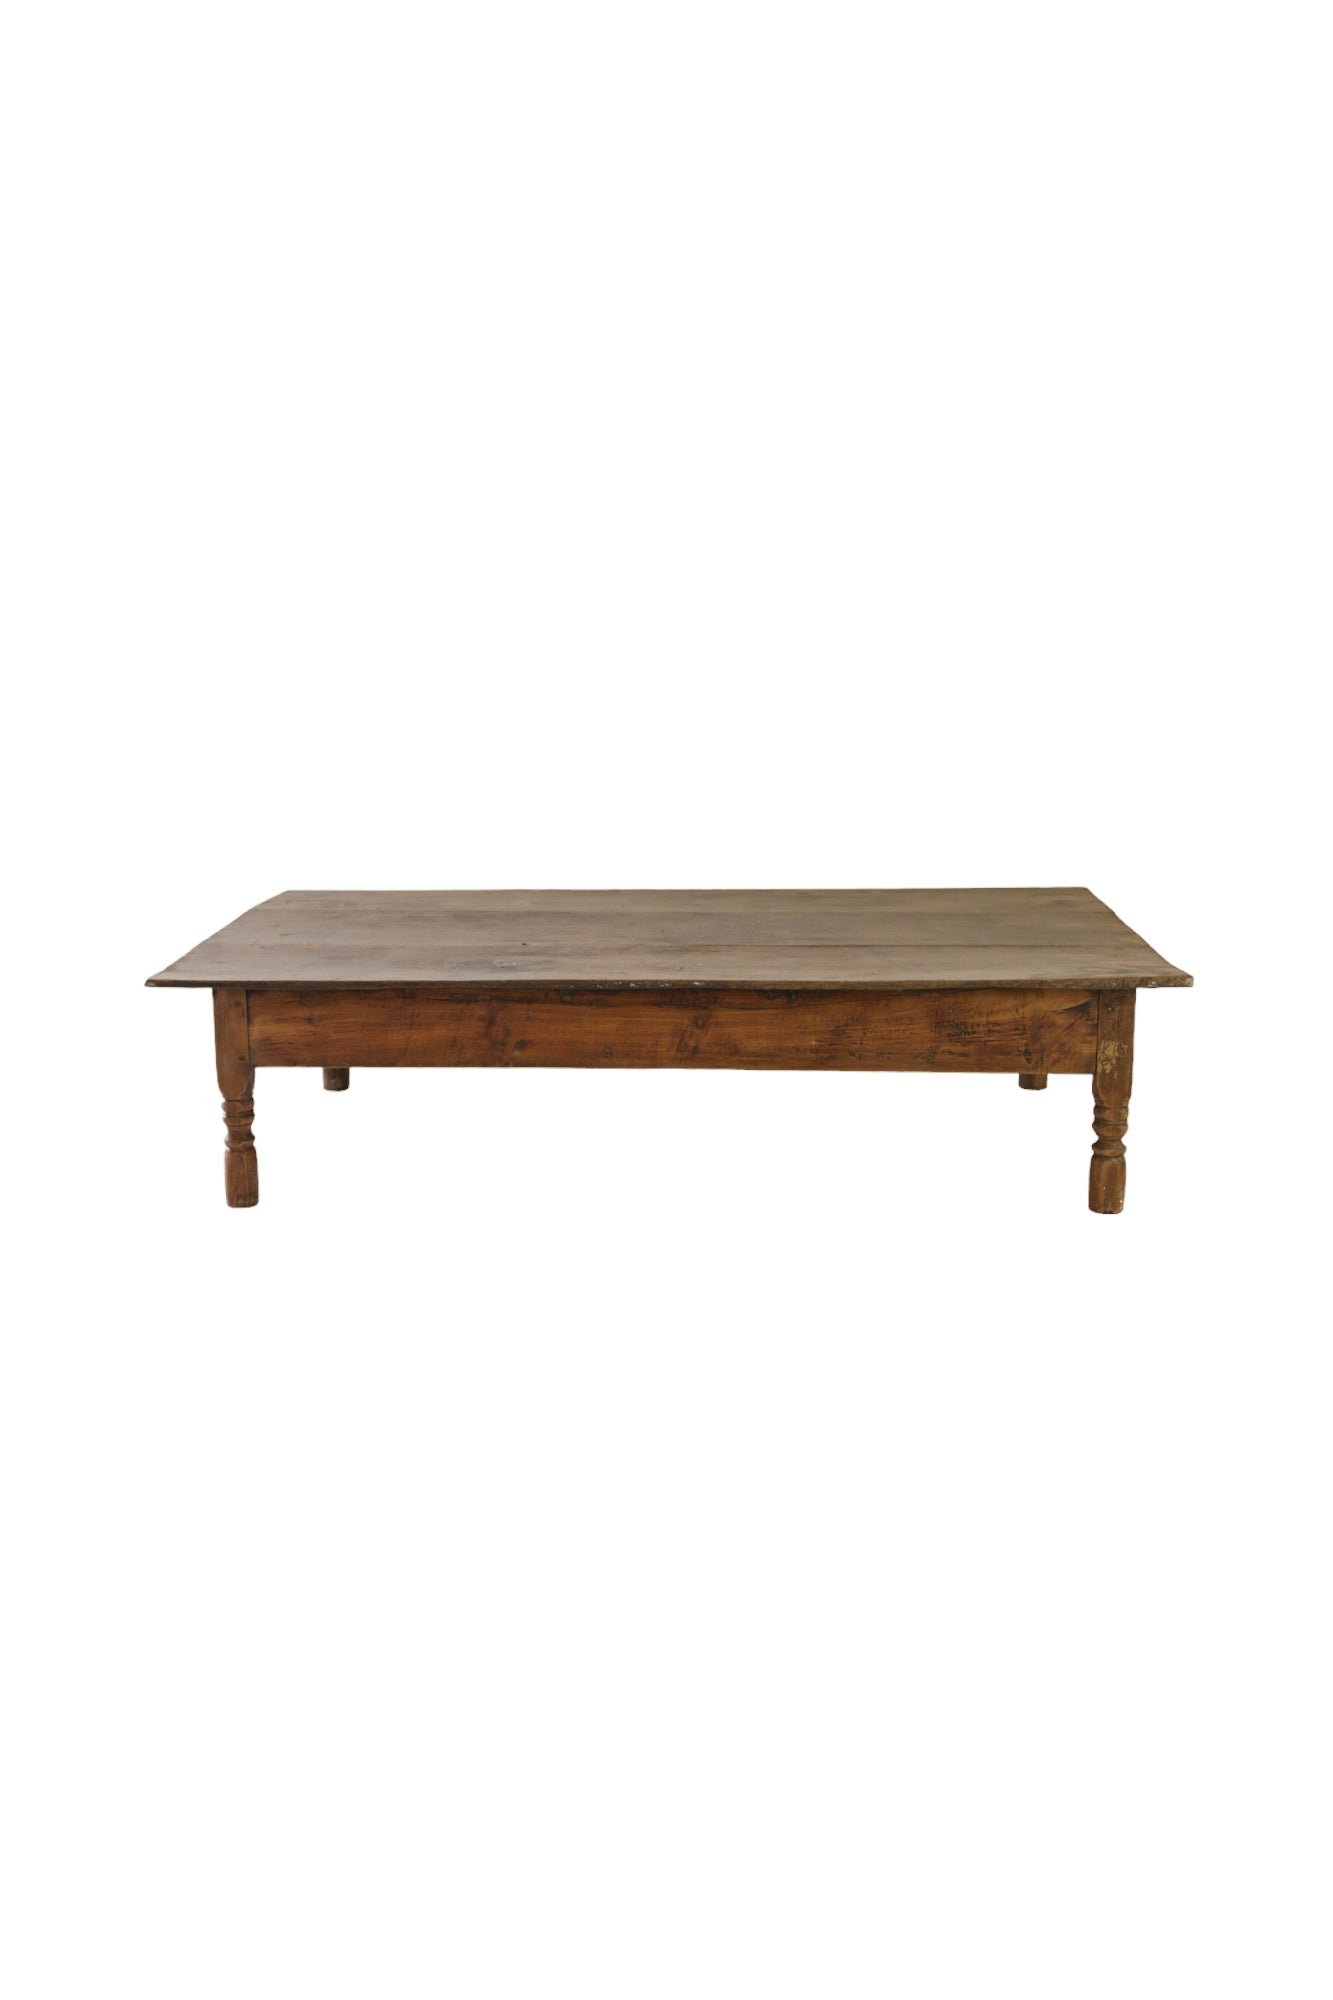 Antique Teak Wood Coffee Table 87x147cm